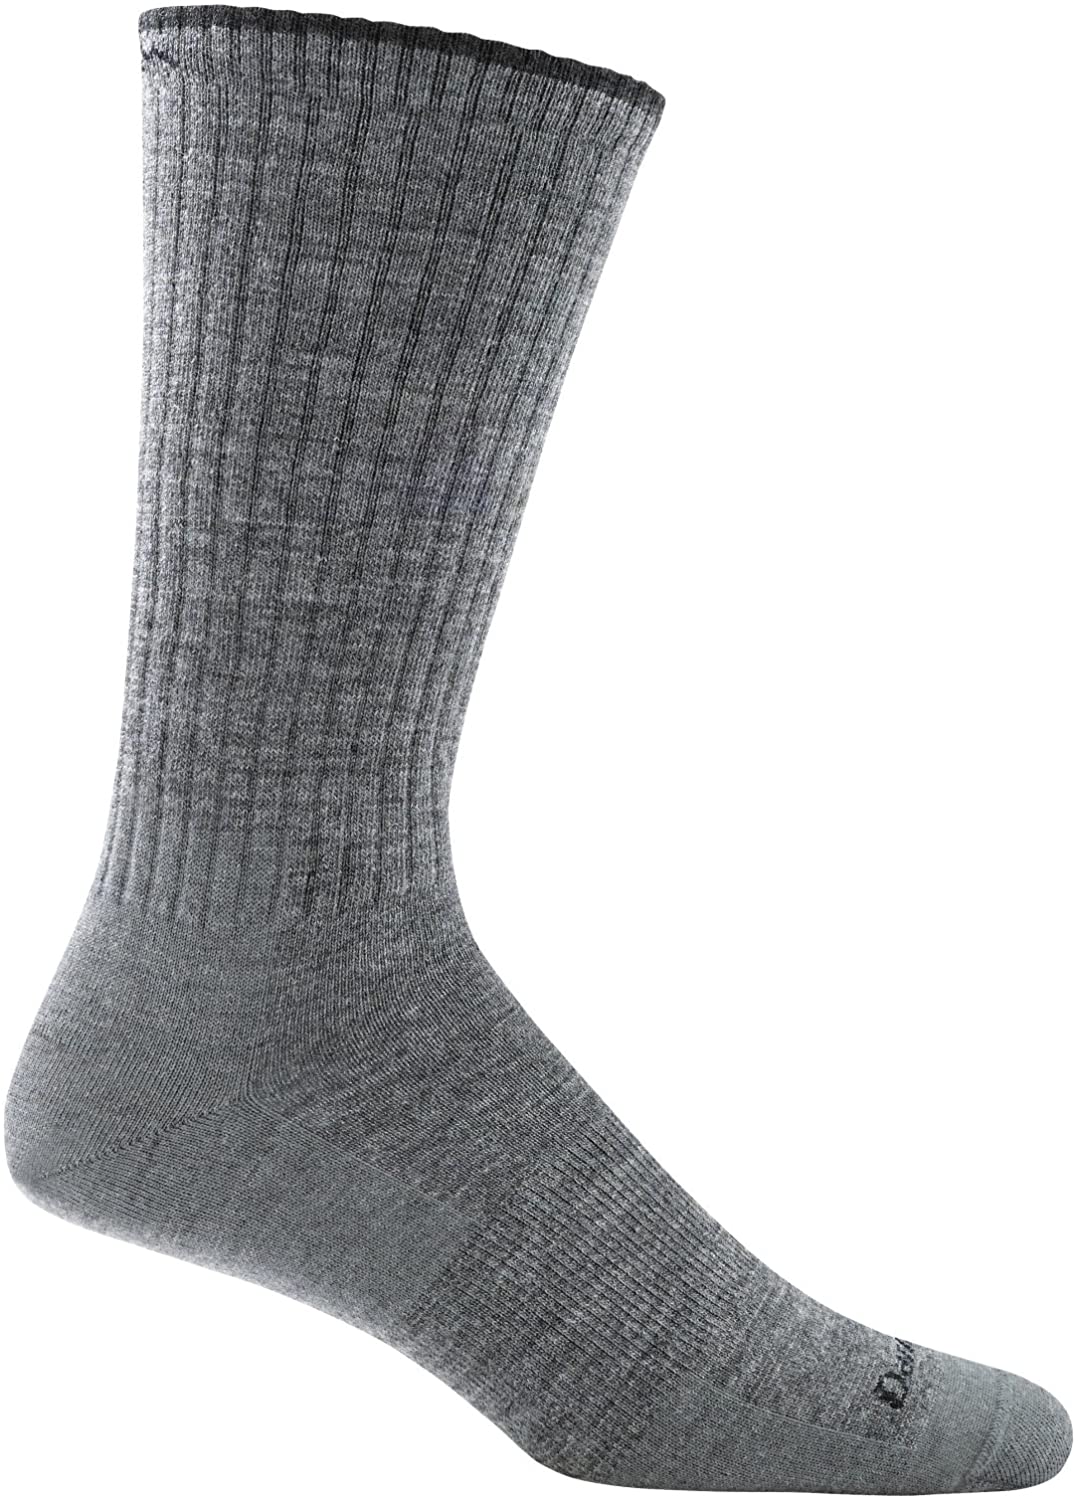 Men's Darn Tough Standard Mid-Calf Lightweight with Cushion Sock in Medium